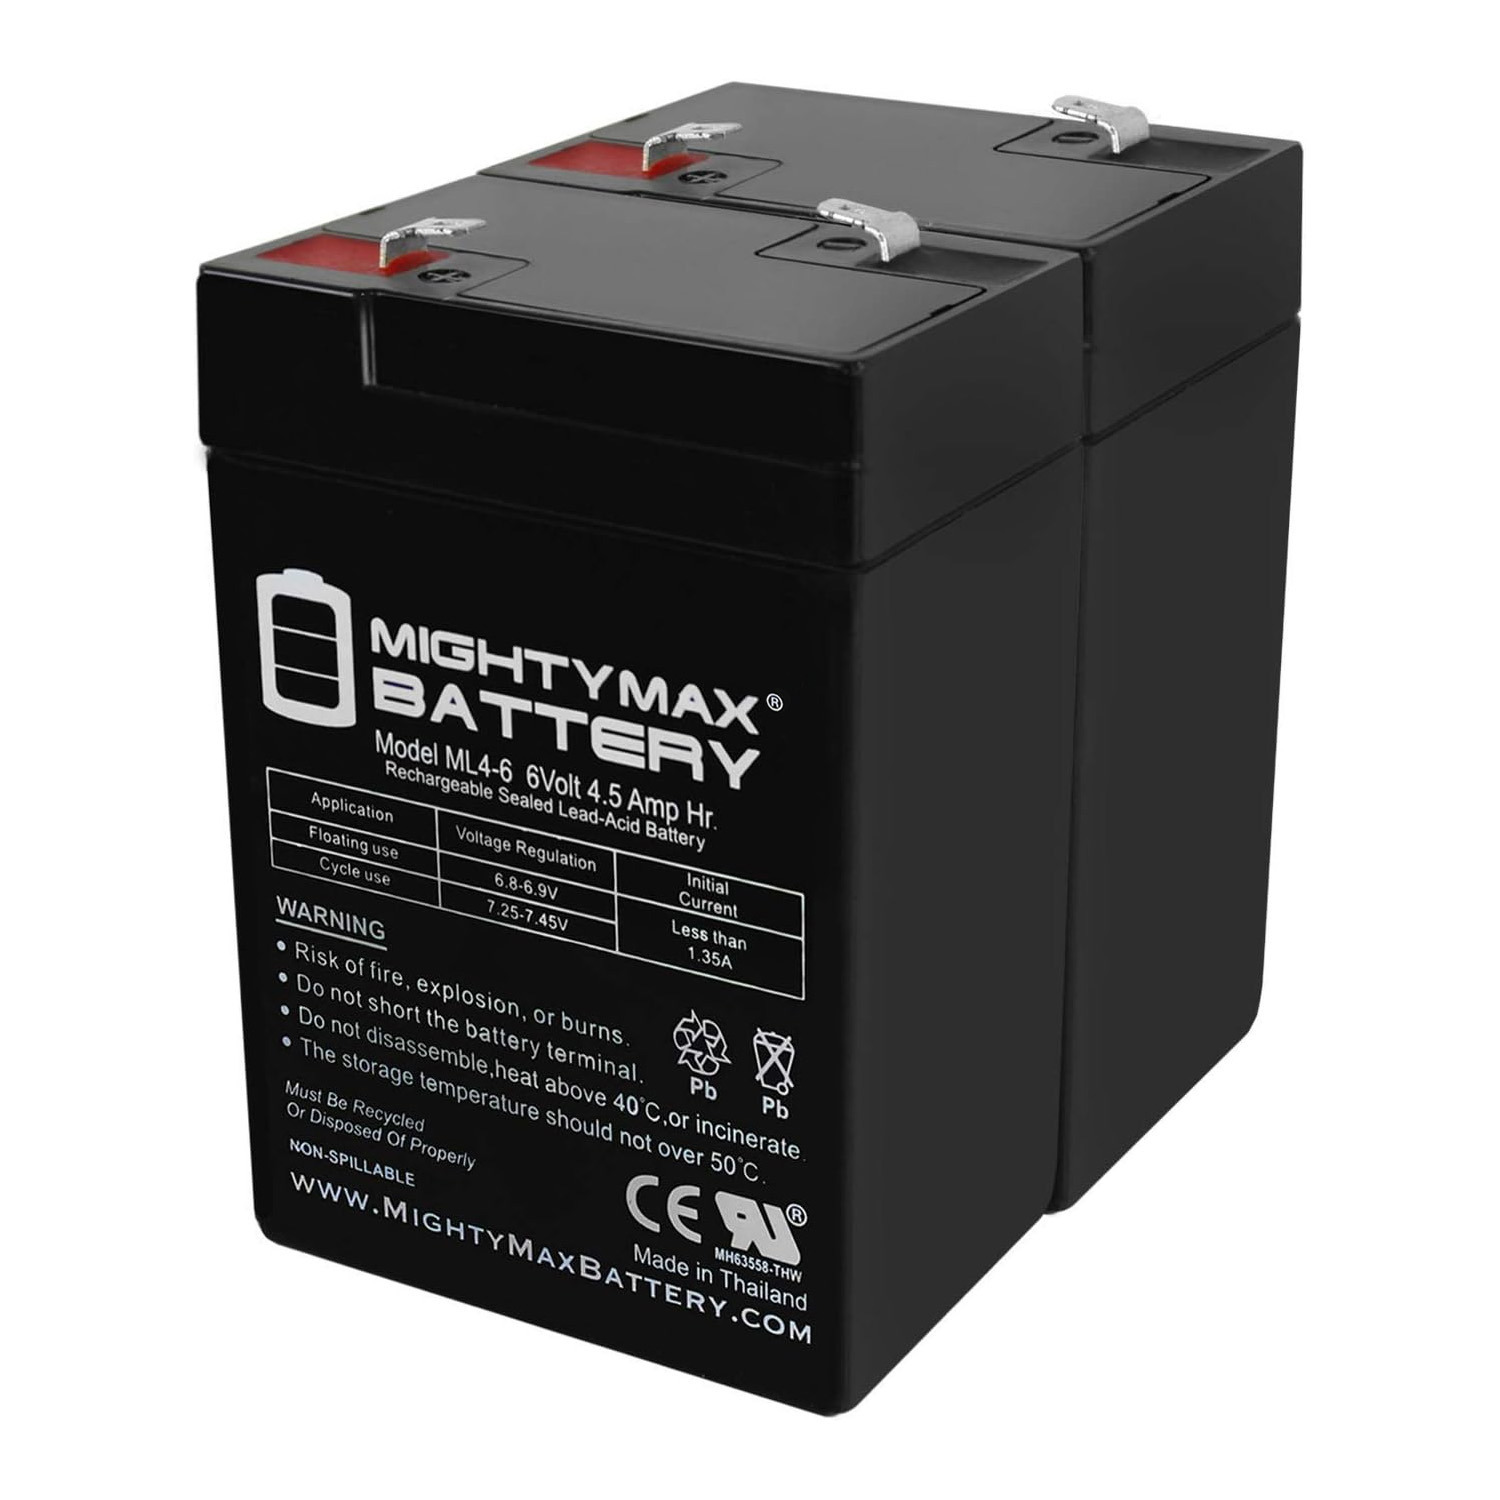 6V 4.5AH SLA Replacement Battery for Emergi-Lite PSM9 - 2 Pack